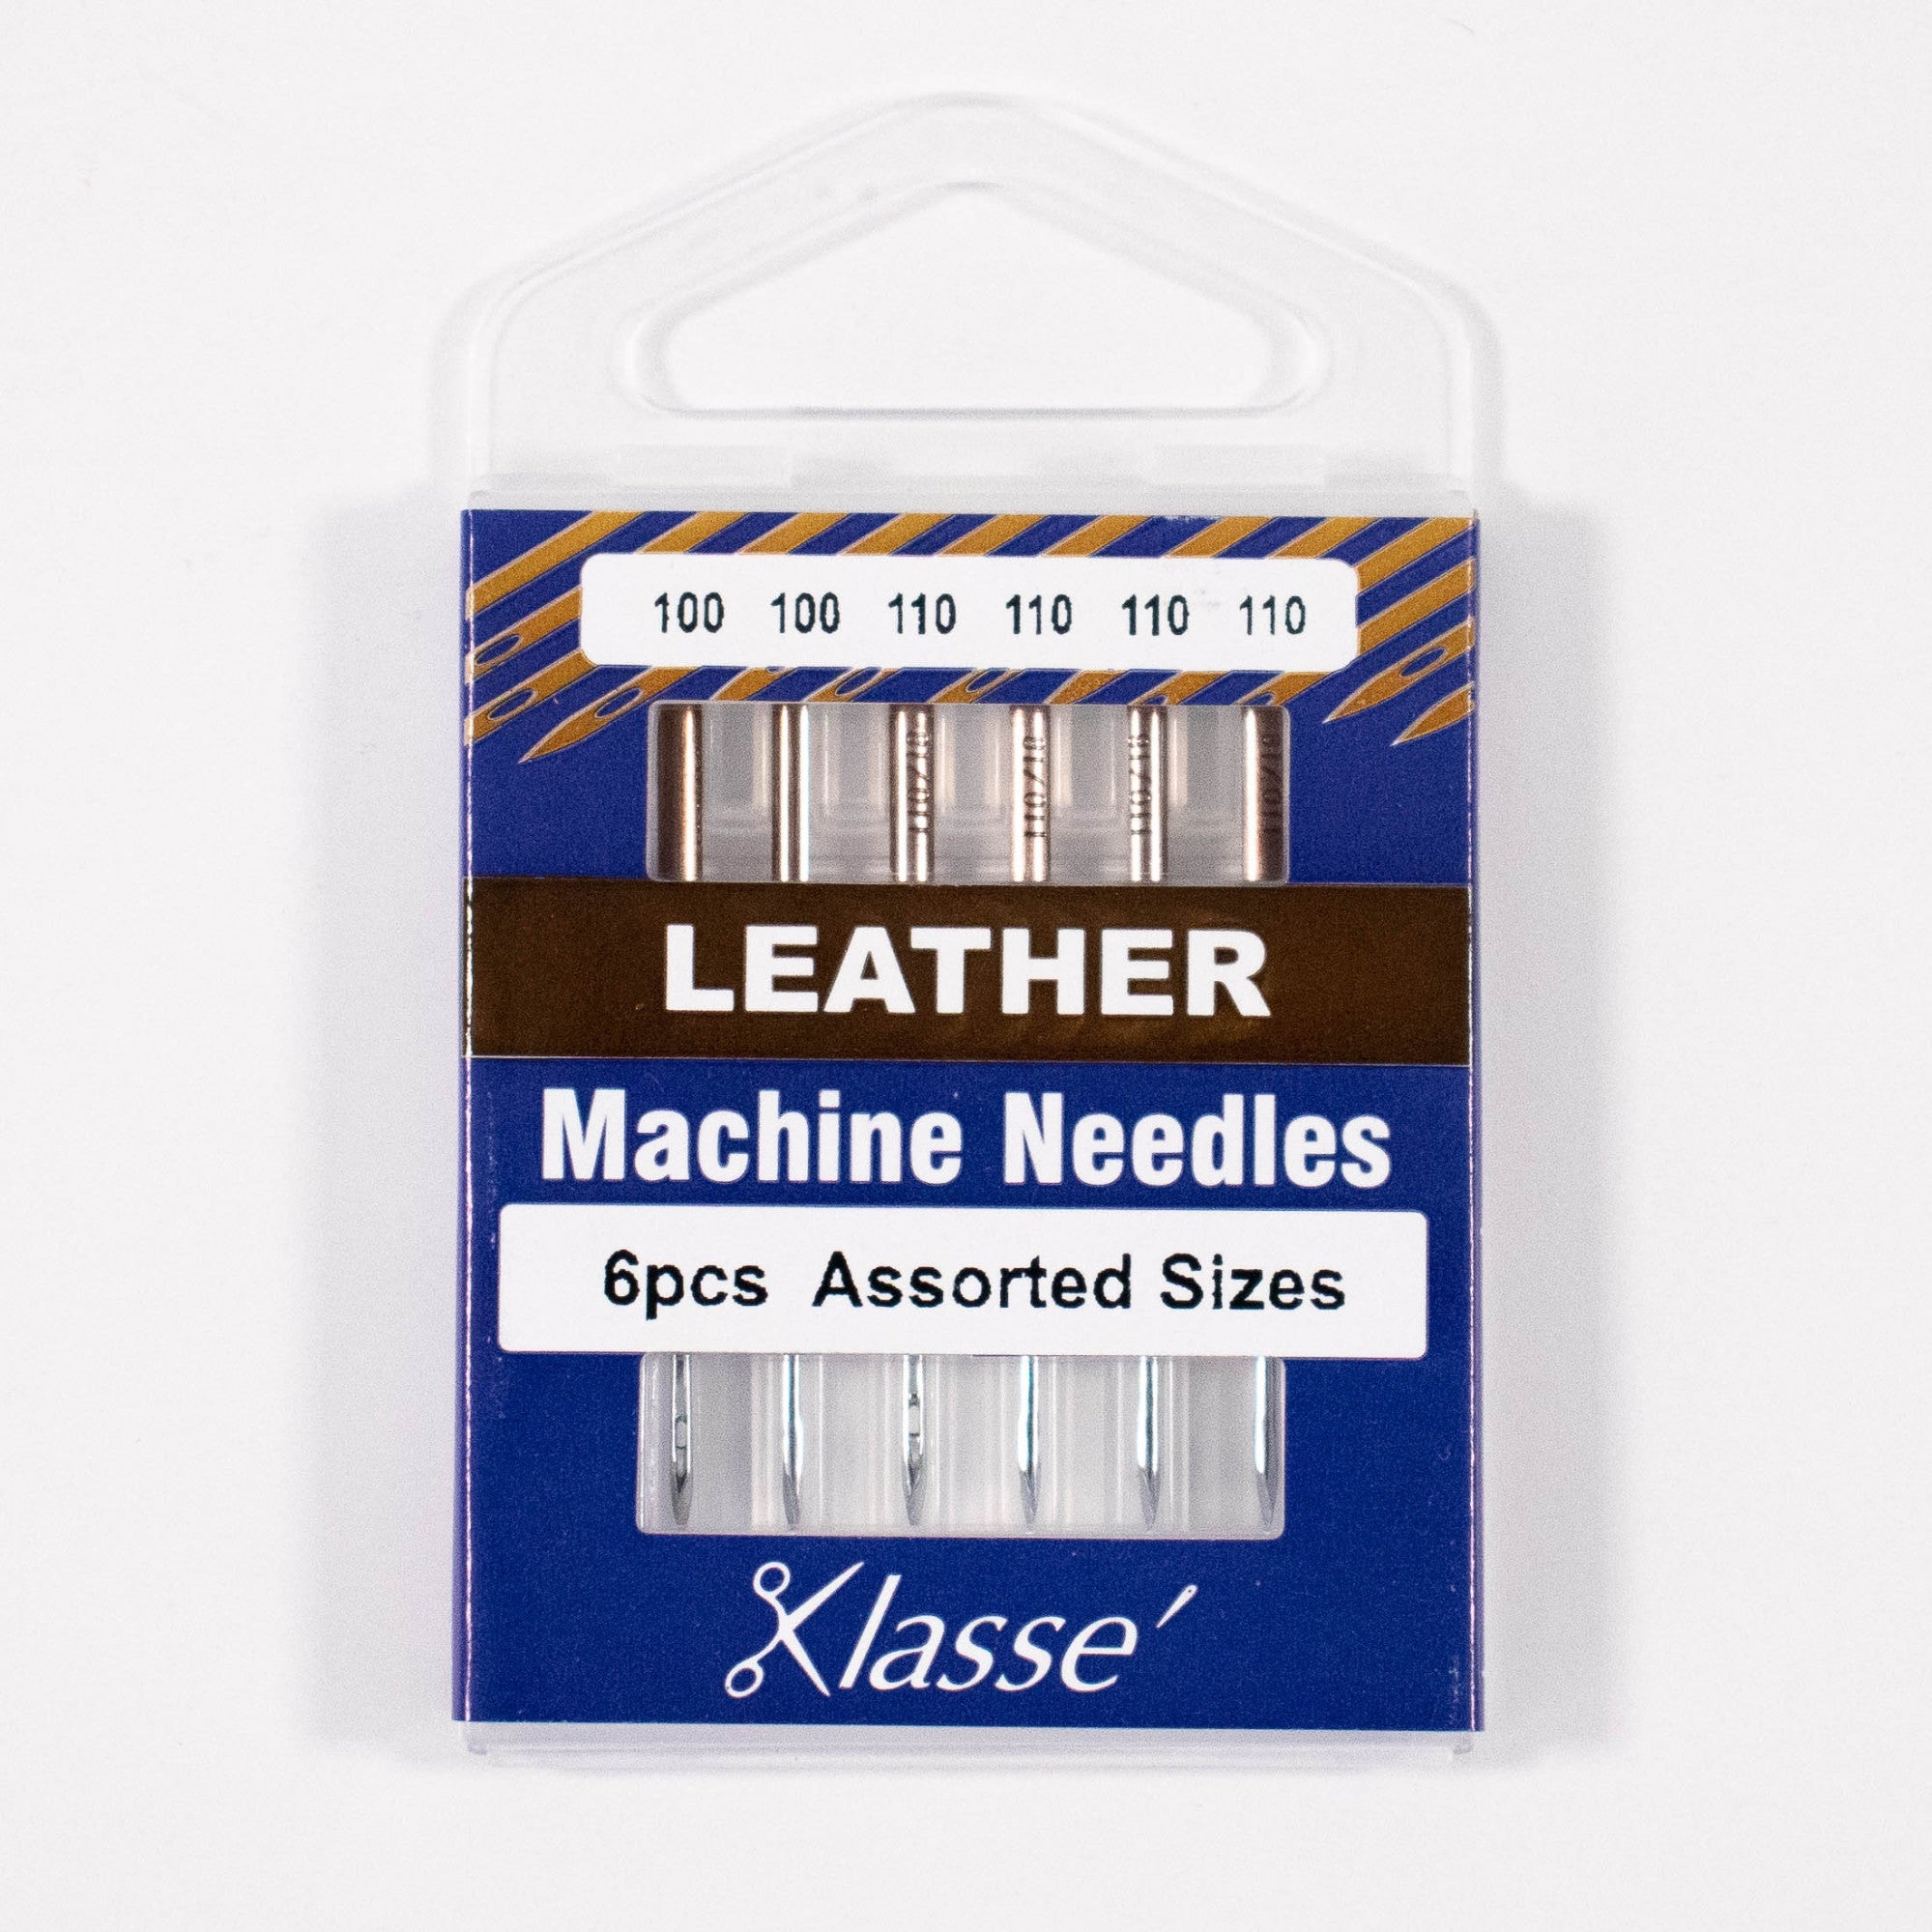 Schmetz Leather Needle Size 100/16